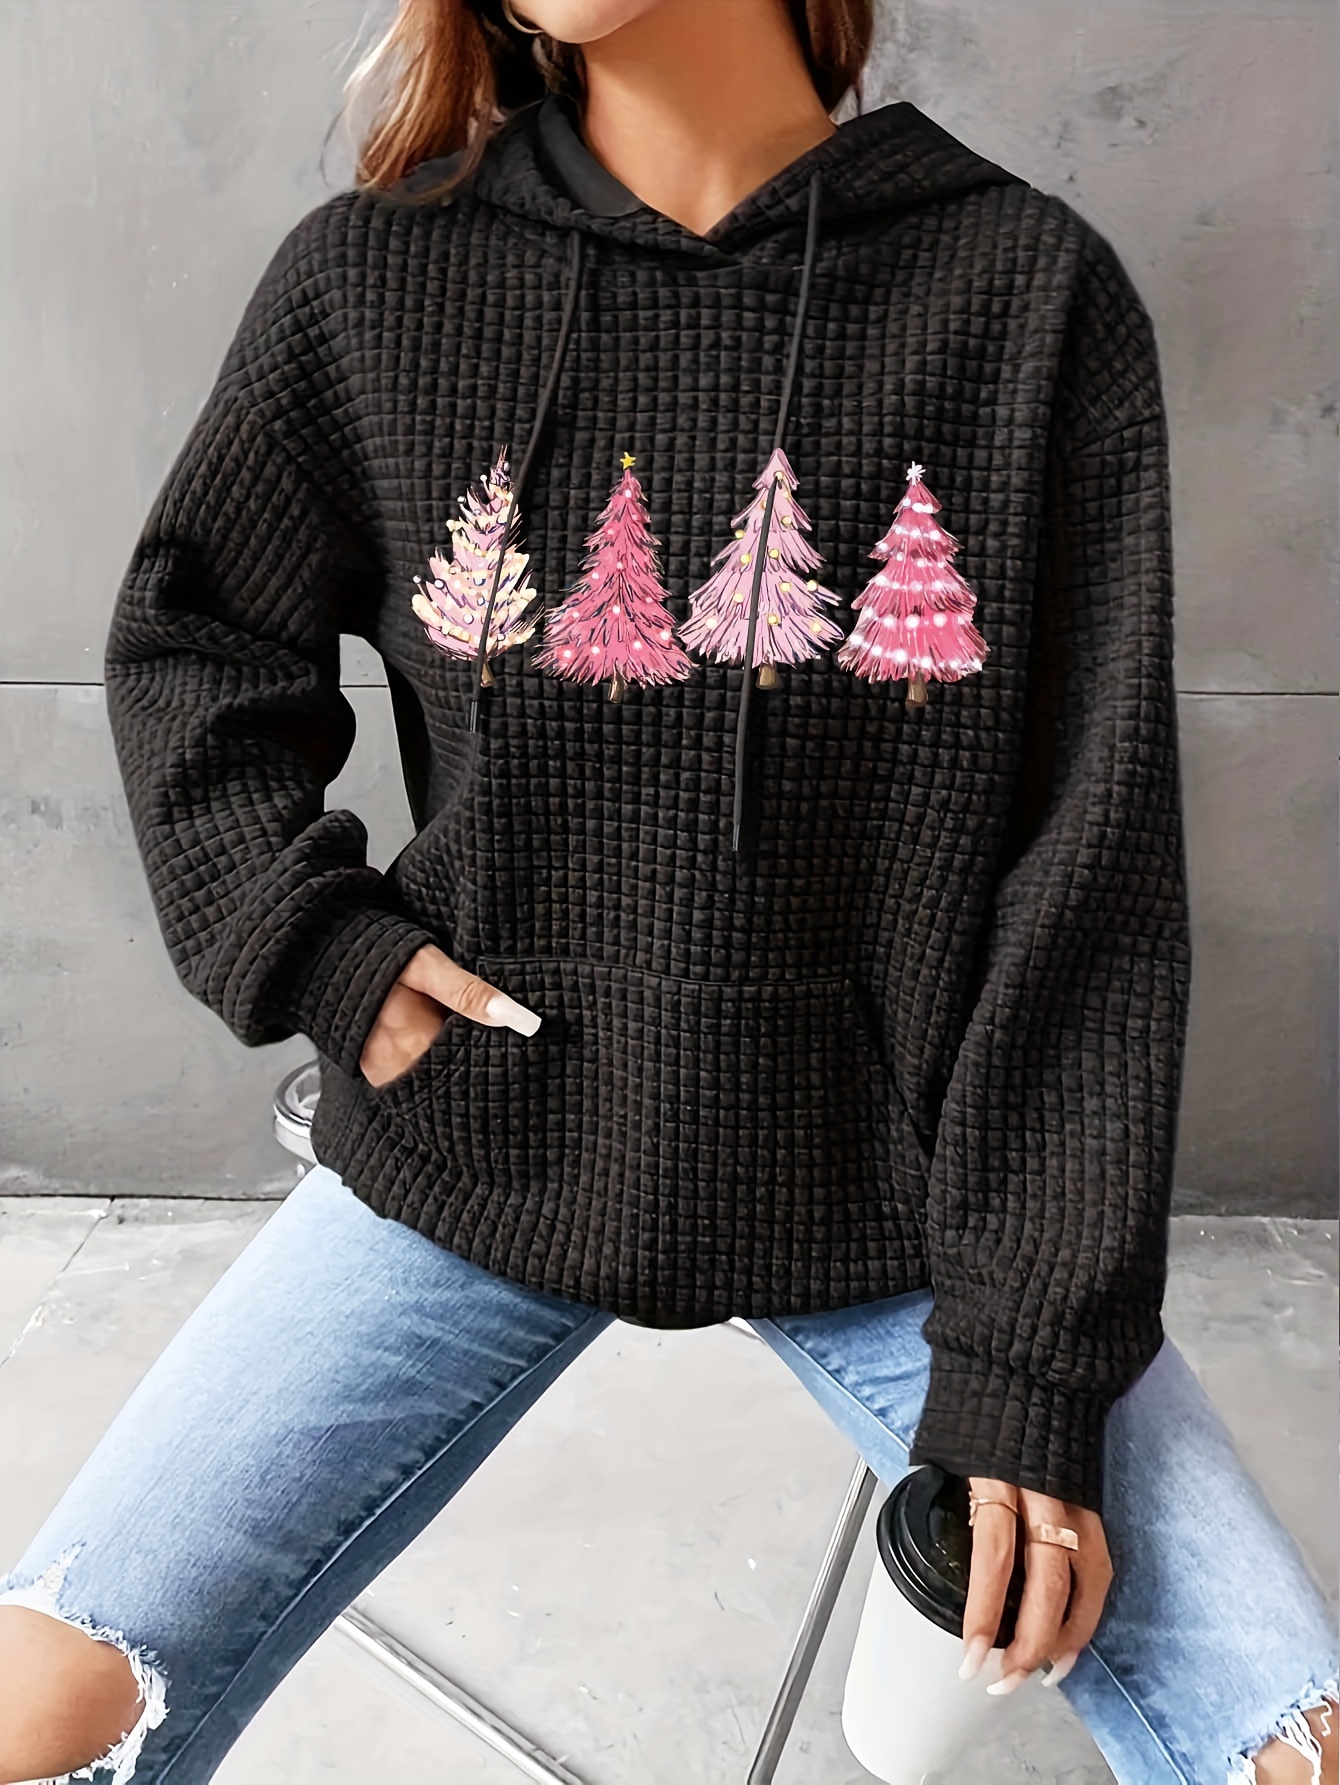 Miekld Womens Christmas Sweatshirt,Plus Size Hoodies,Cute Hoodies Casual  Drawstring Jackets With Pockets For Women9